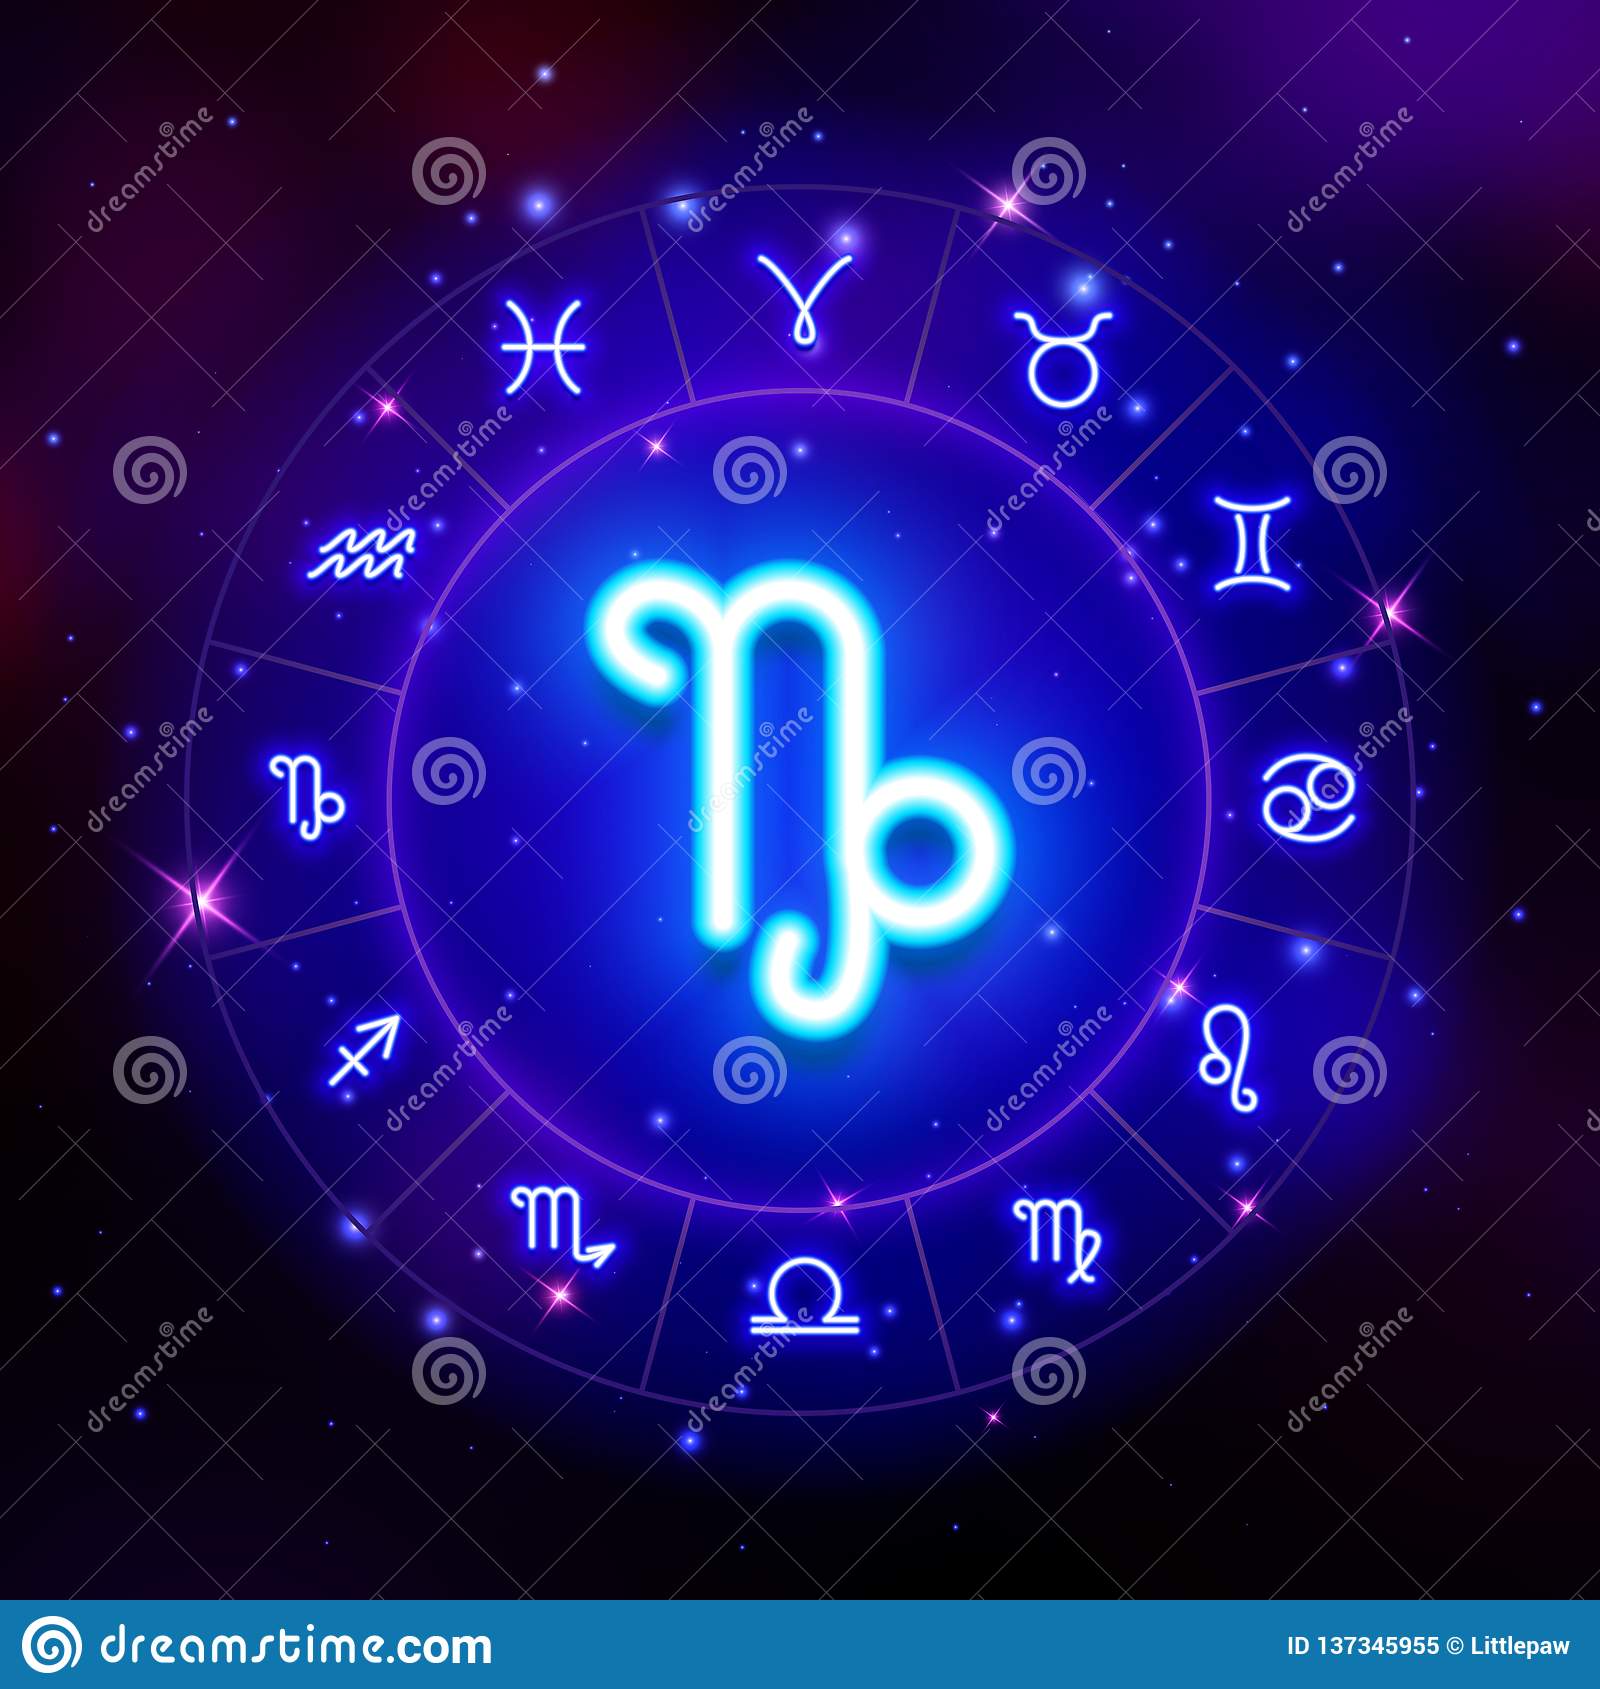 Capricorn zodiac sign horoscope symbol vector illustration stock vector